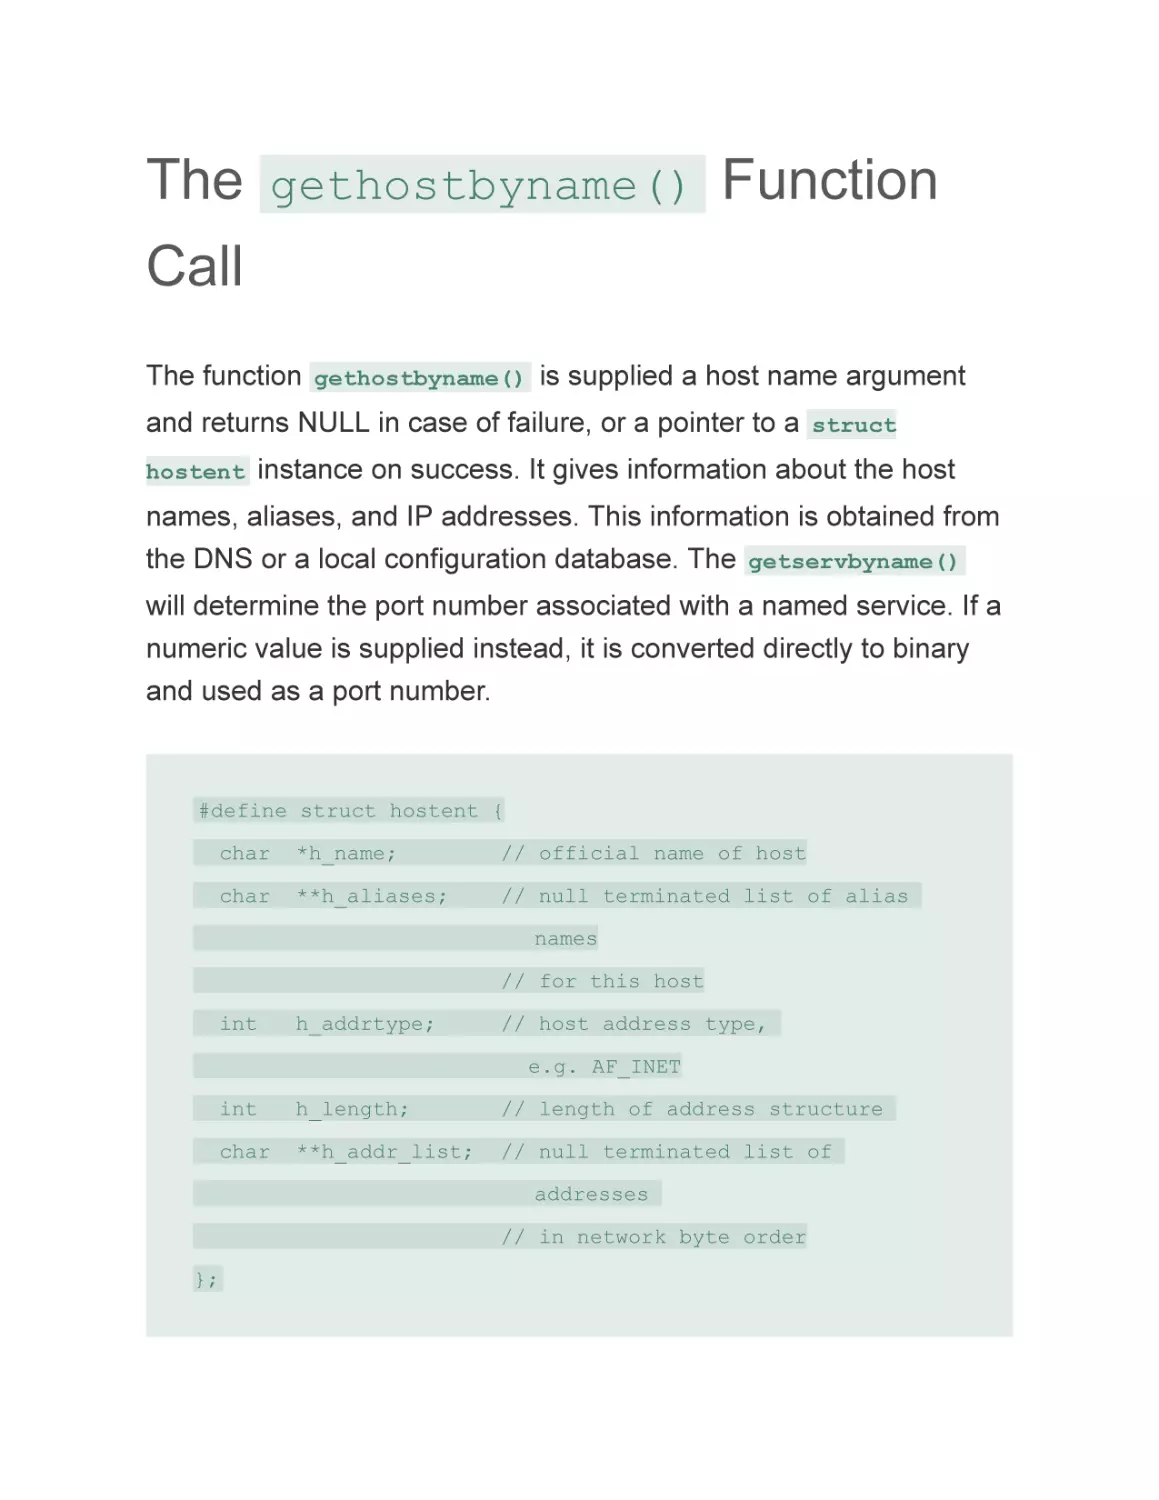 The gethostbyname() Function Call